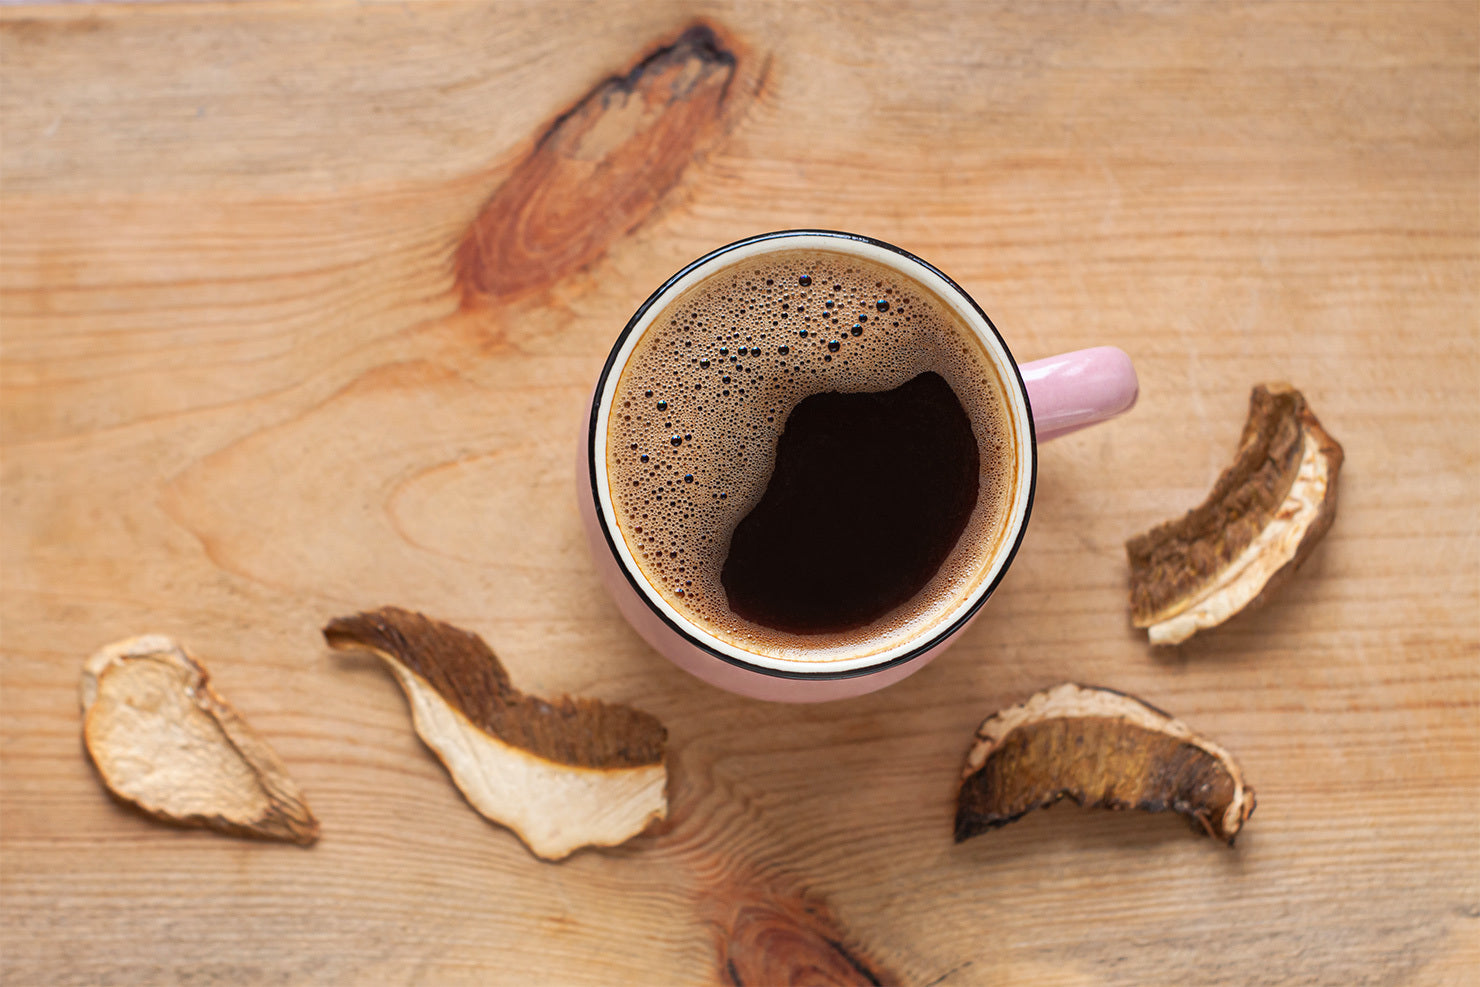 Mushroom Coffee - Is It Worth the Hype?